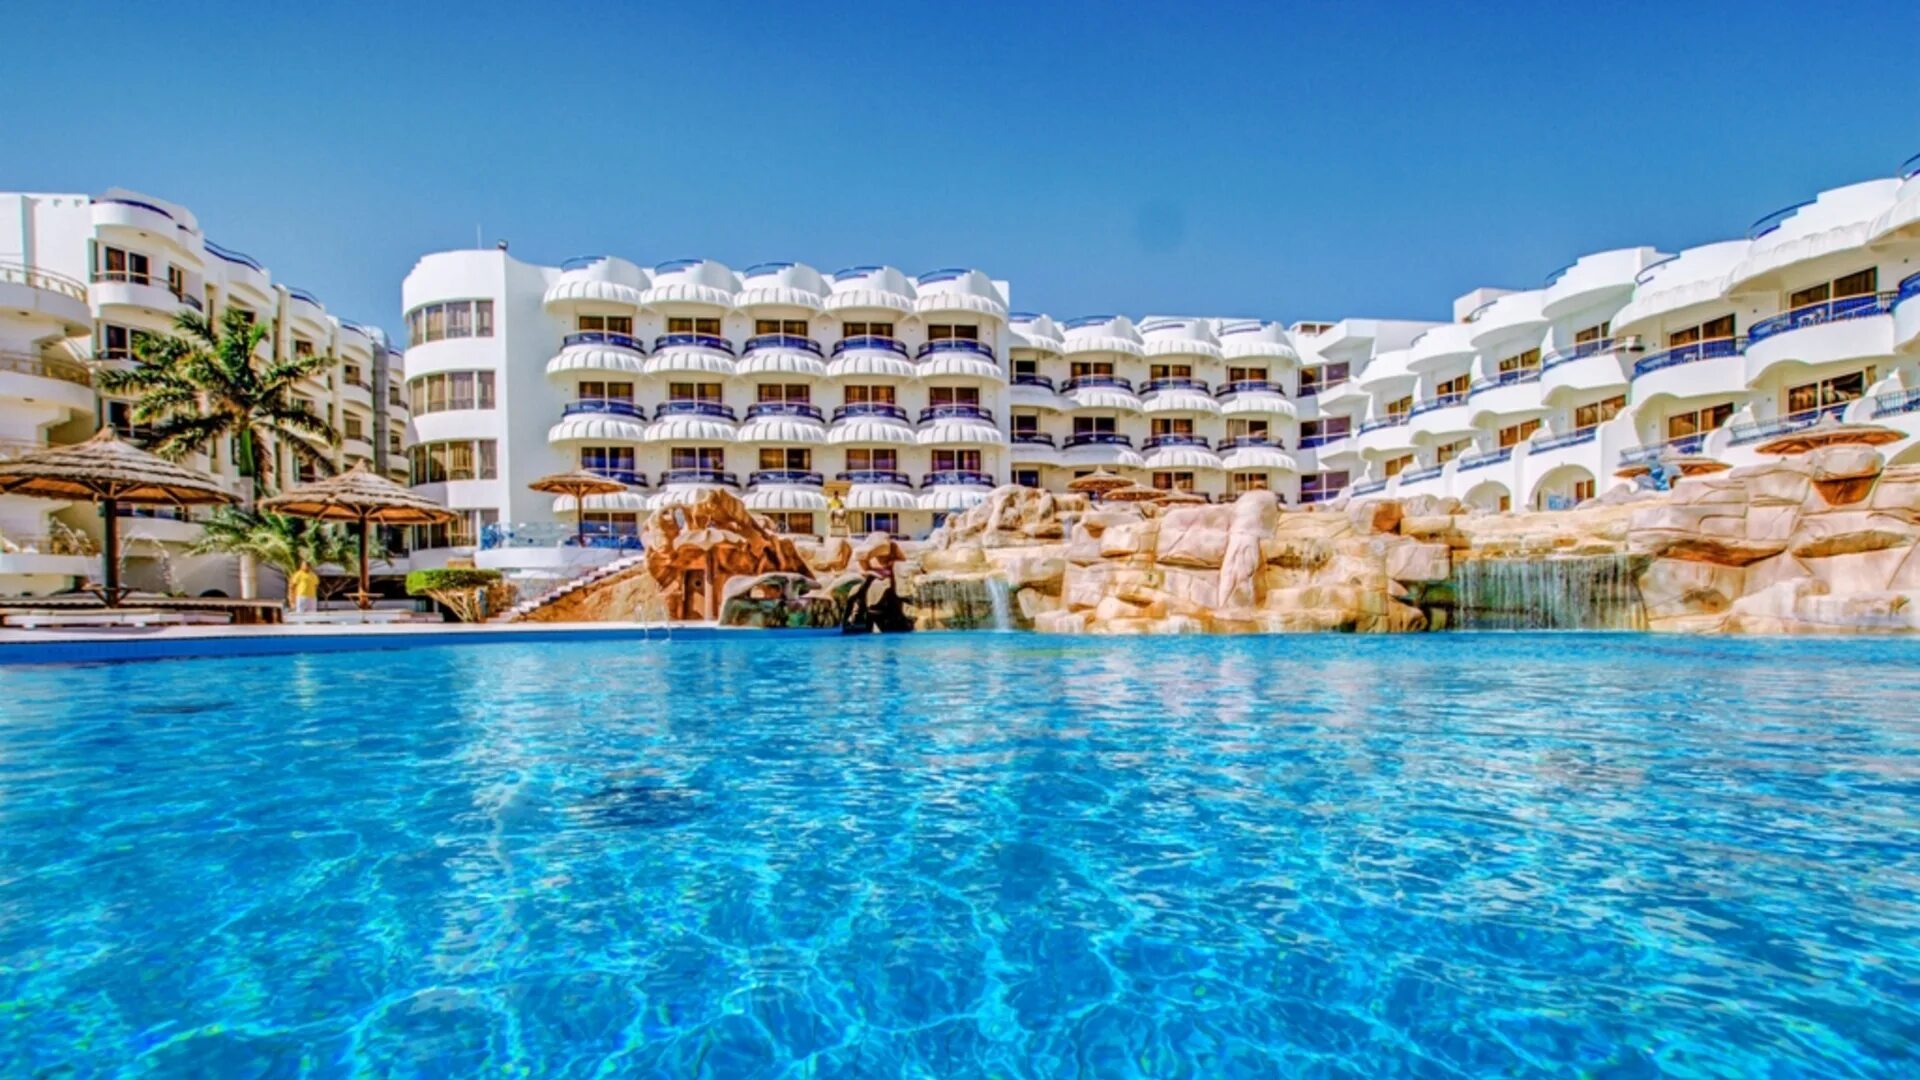 Seagull beach hurghada 4. Отель Sea Gull Beach Resort & Club 4*. Sea Gull 4 Египет. Отель Seagull Beach Resort Hurghada. Сигал Бич Резорт 4 Хургада.